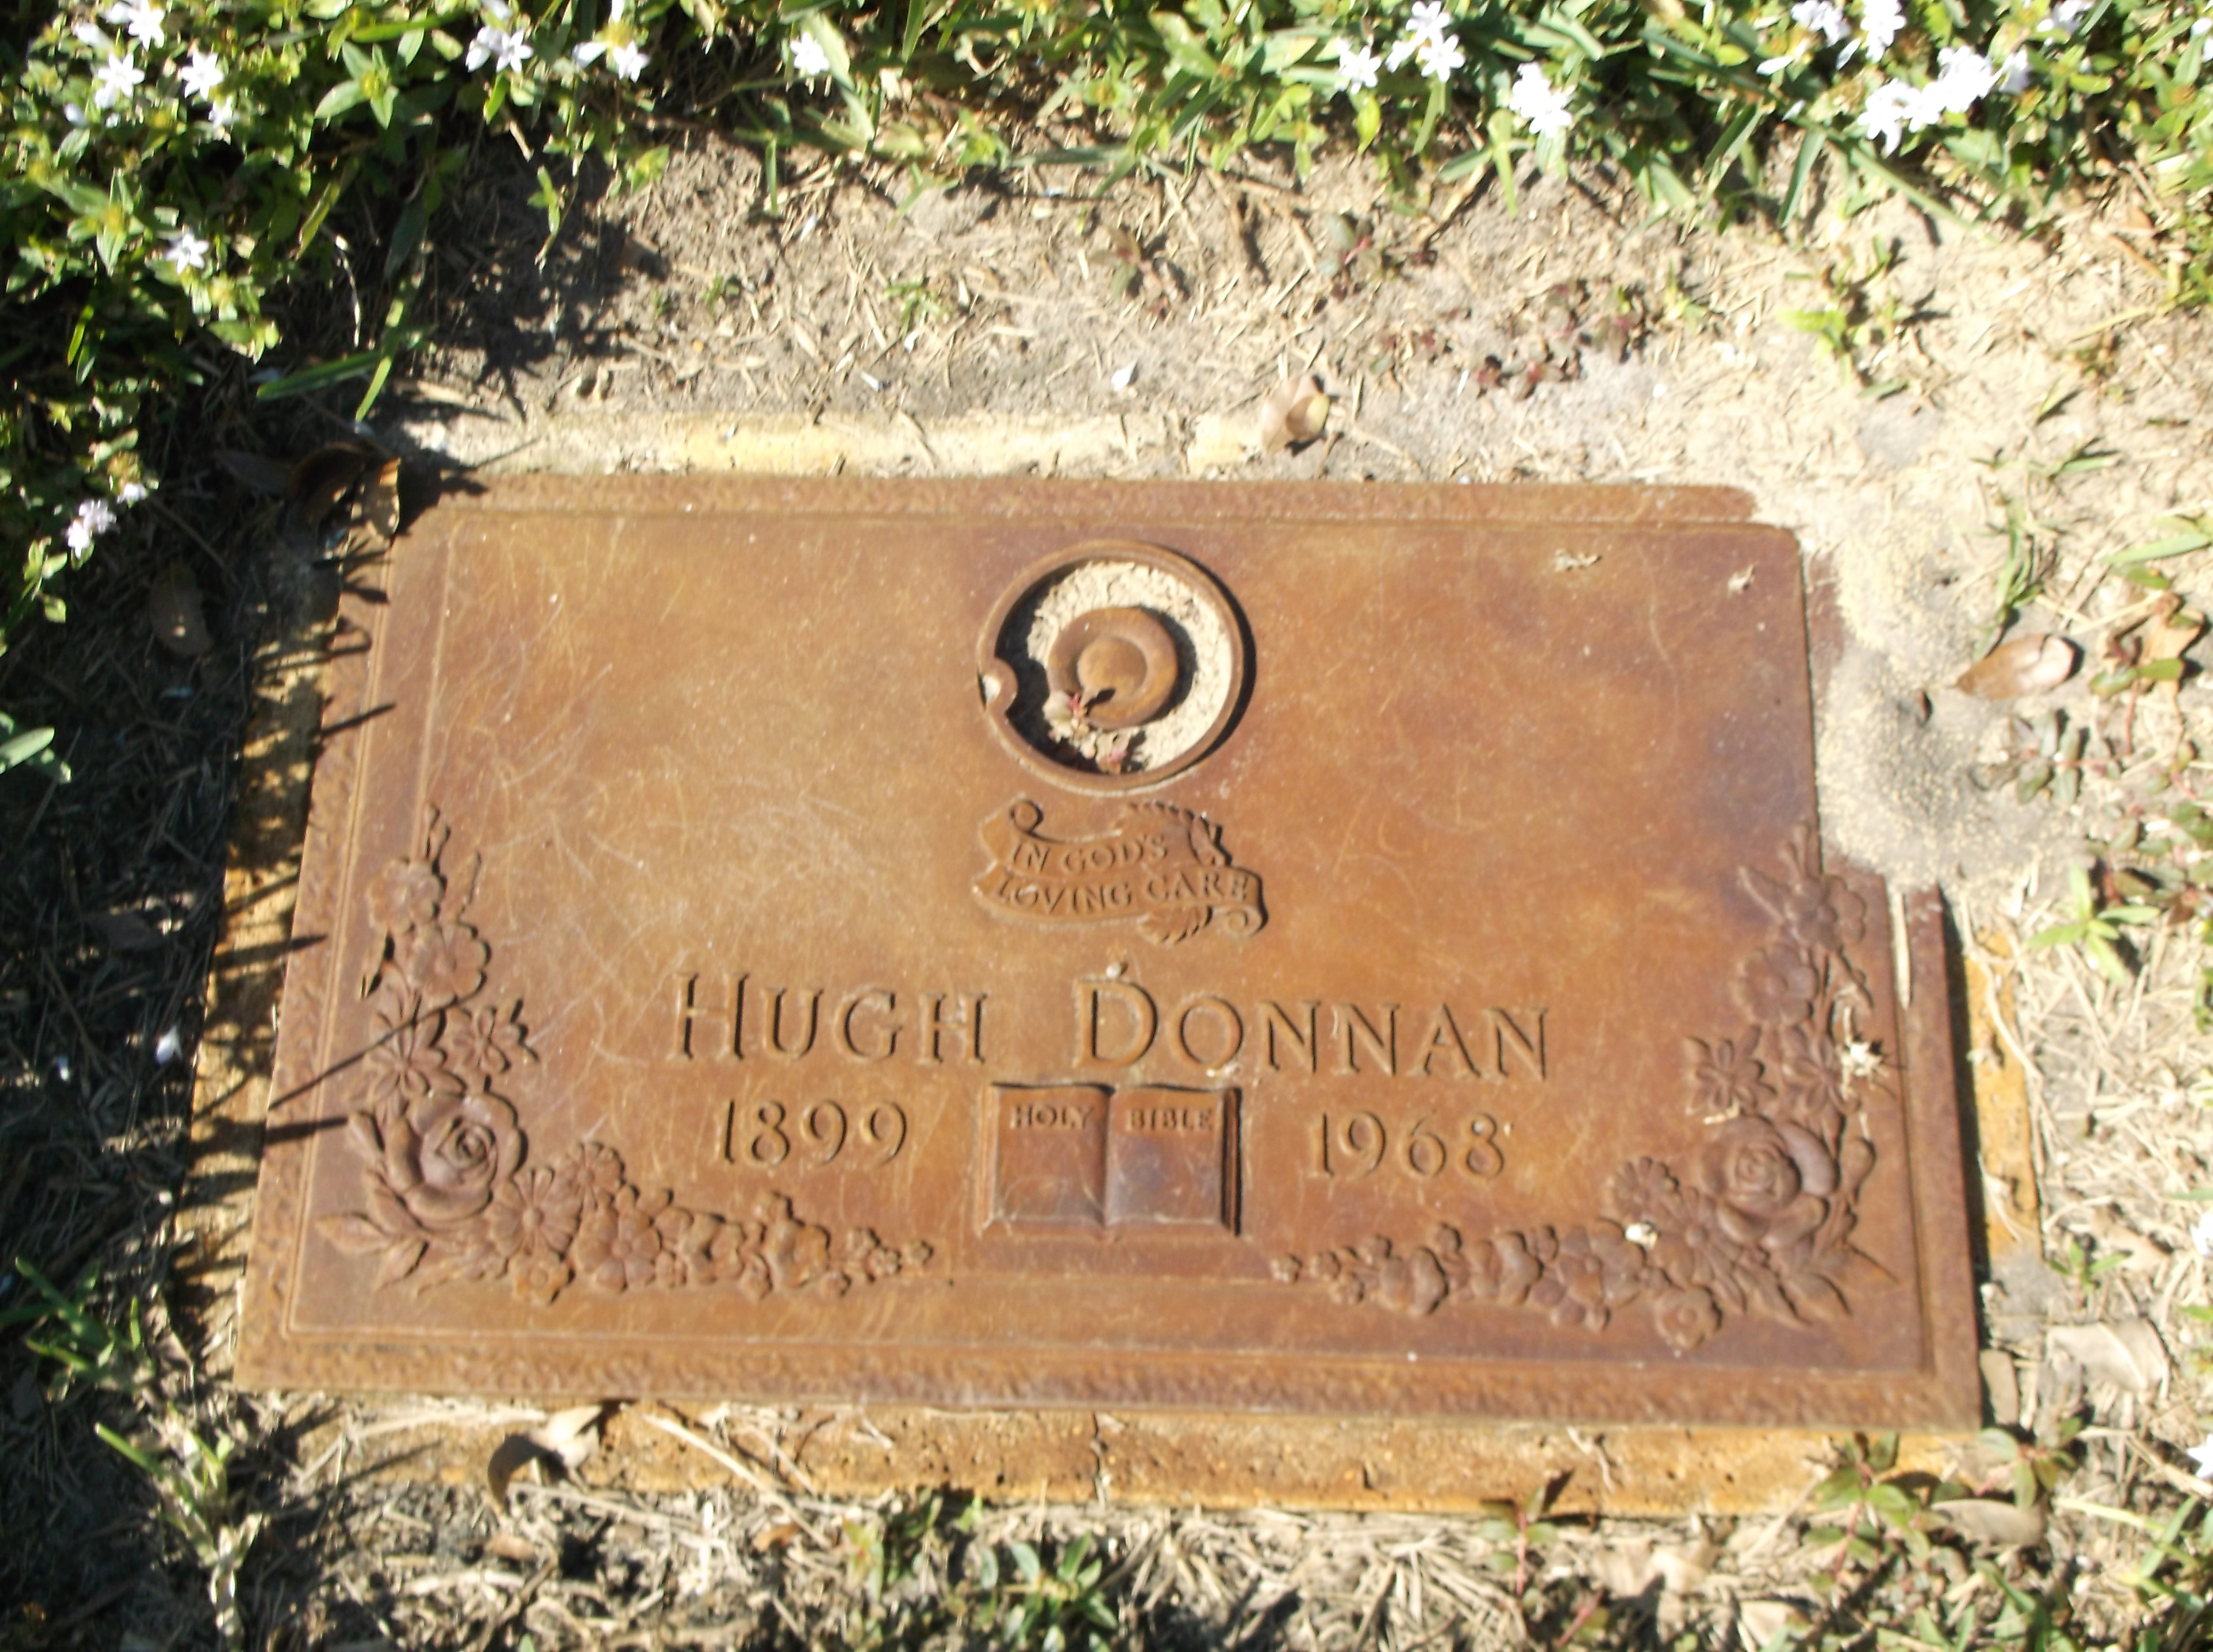 Hugh Donnan